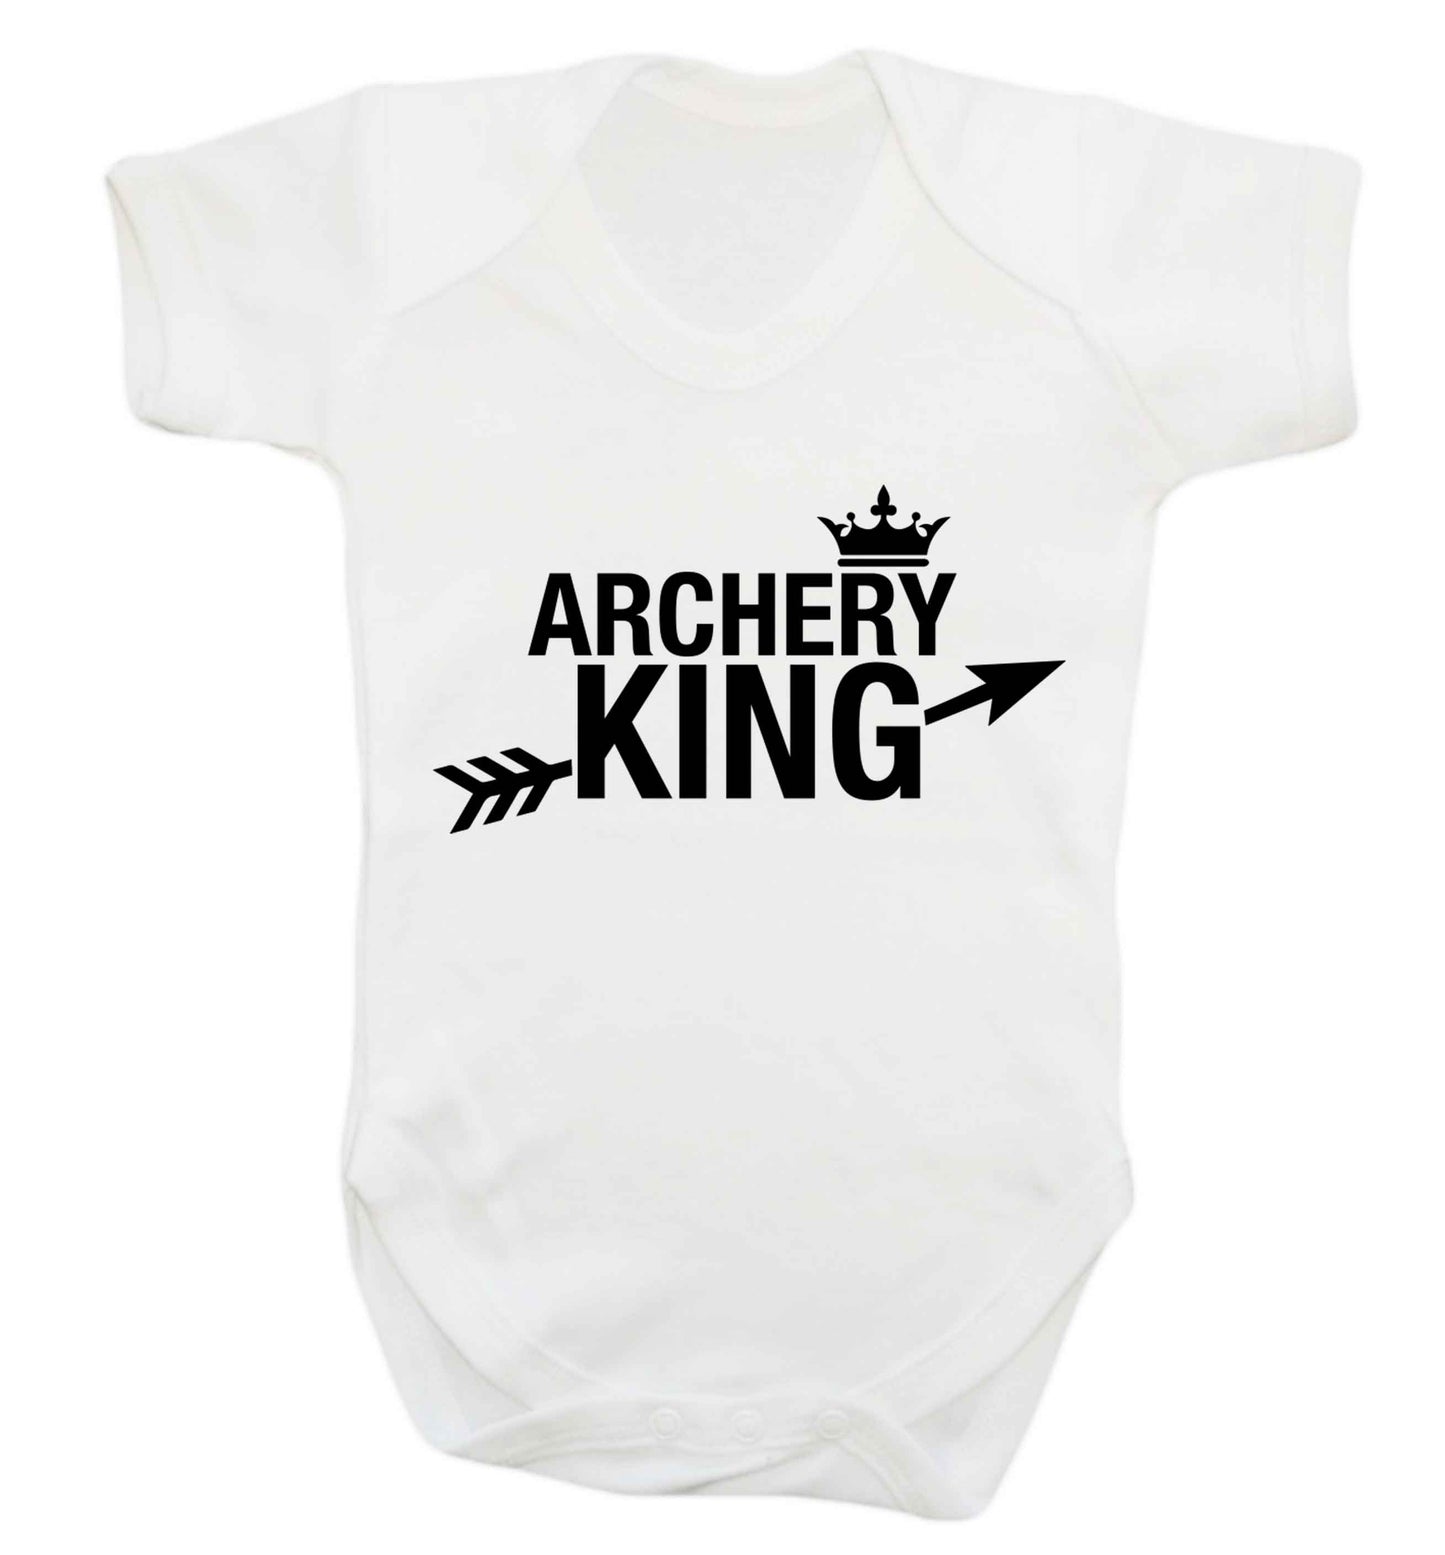 Archery king Baby Vest white 18-24 months